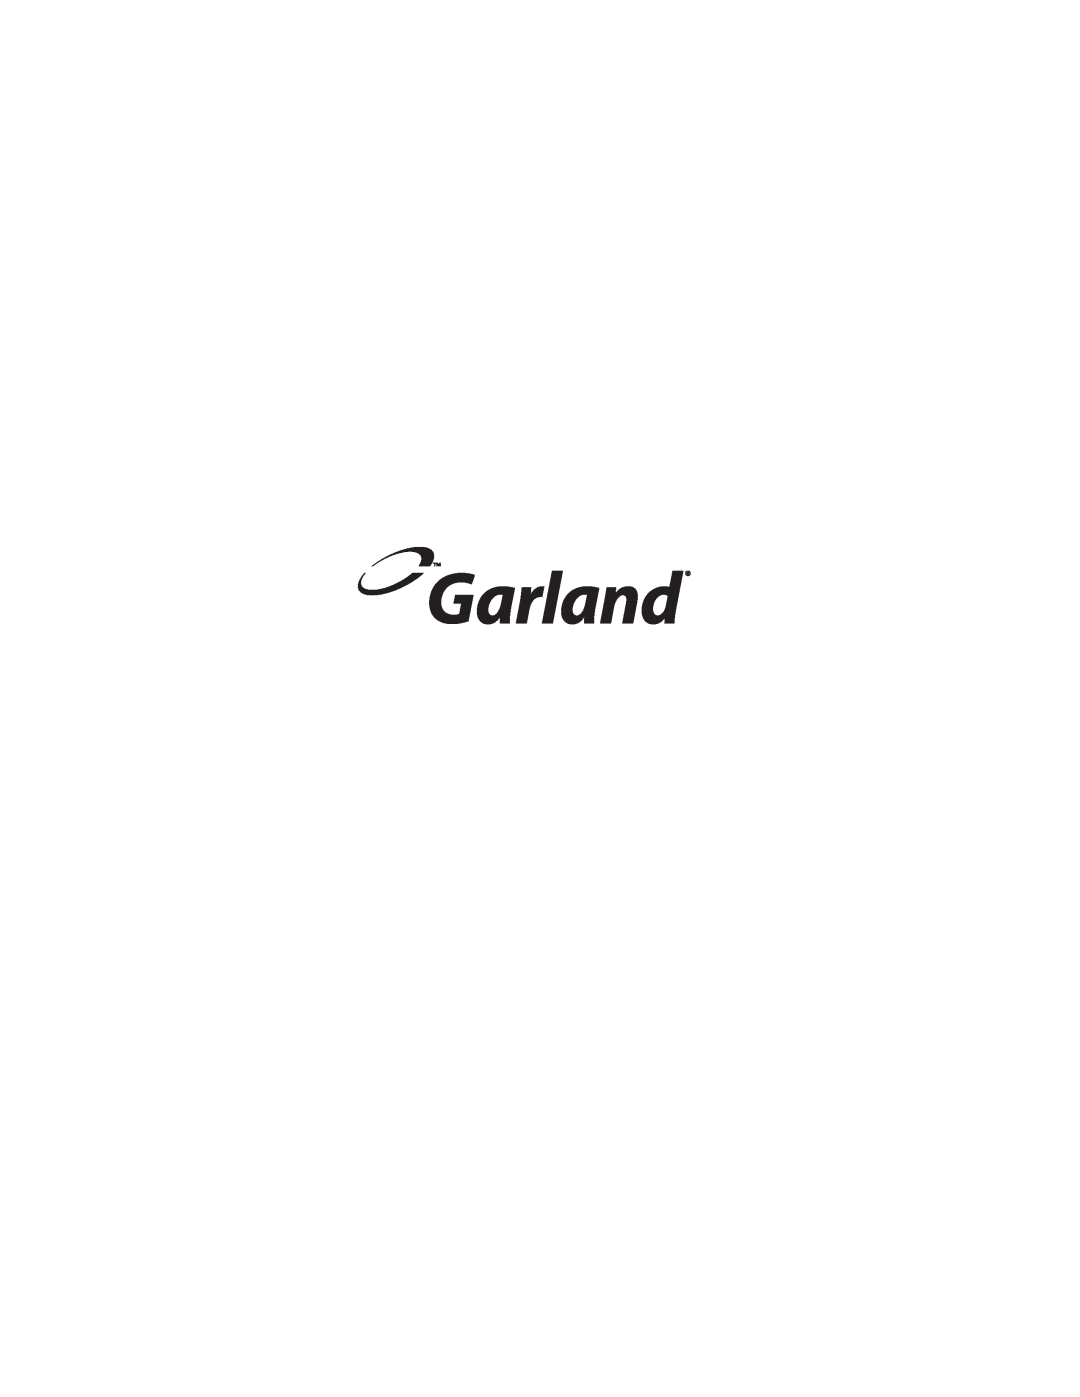 Garland 2000 operation manual 